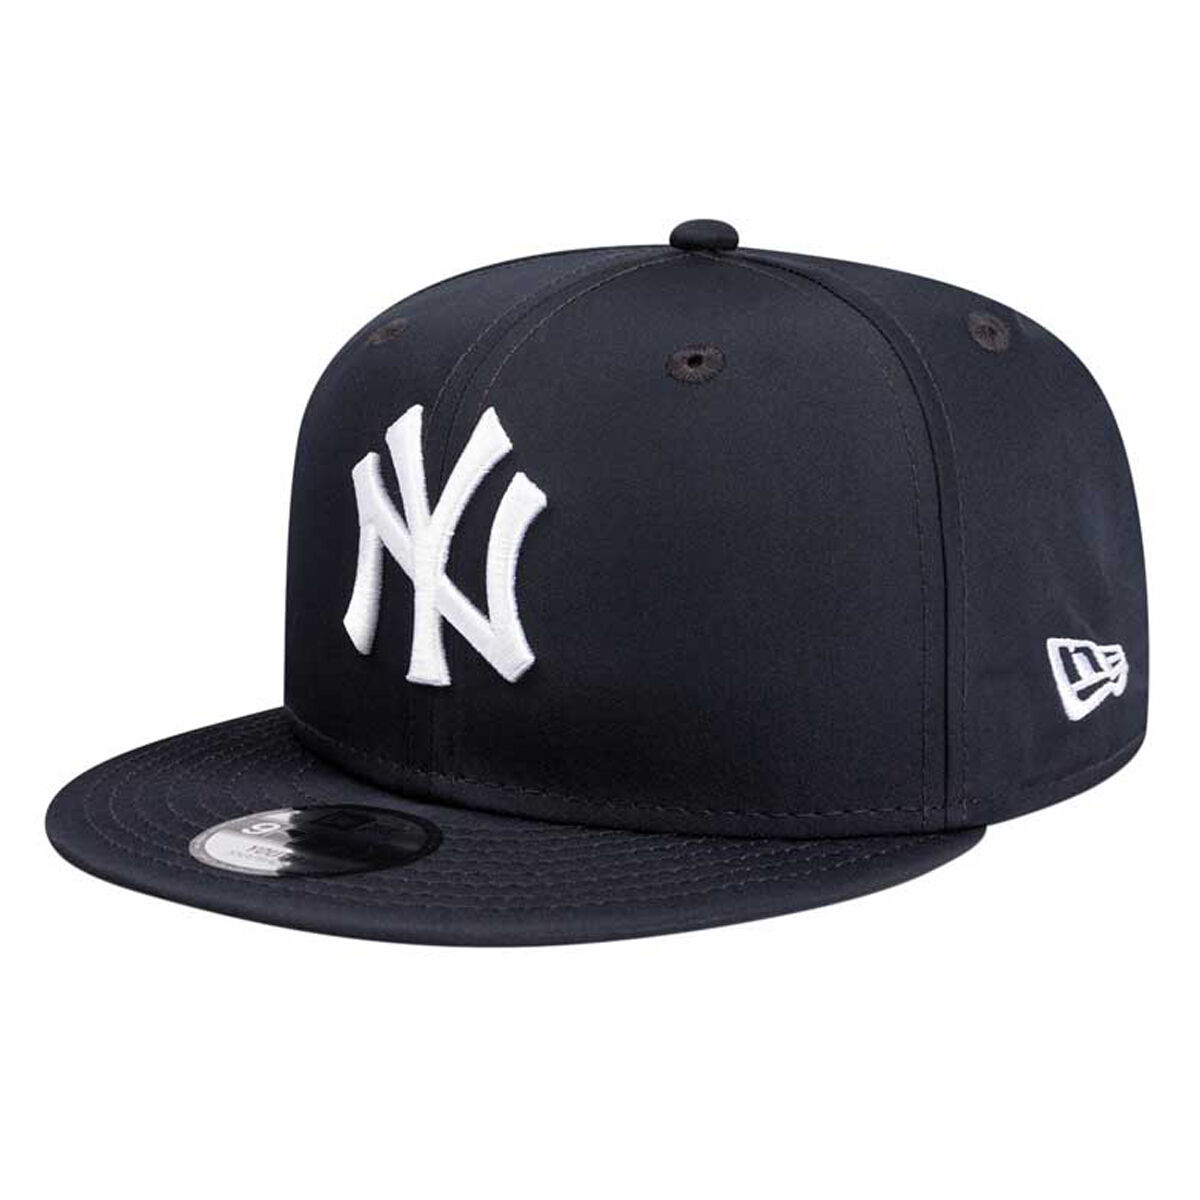 NWT New Under Armour Boys UA Flat Brim Baseball Cap Gray/Black Snapback Hat OSFA 